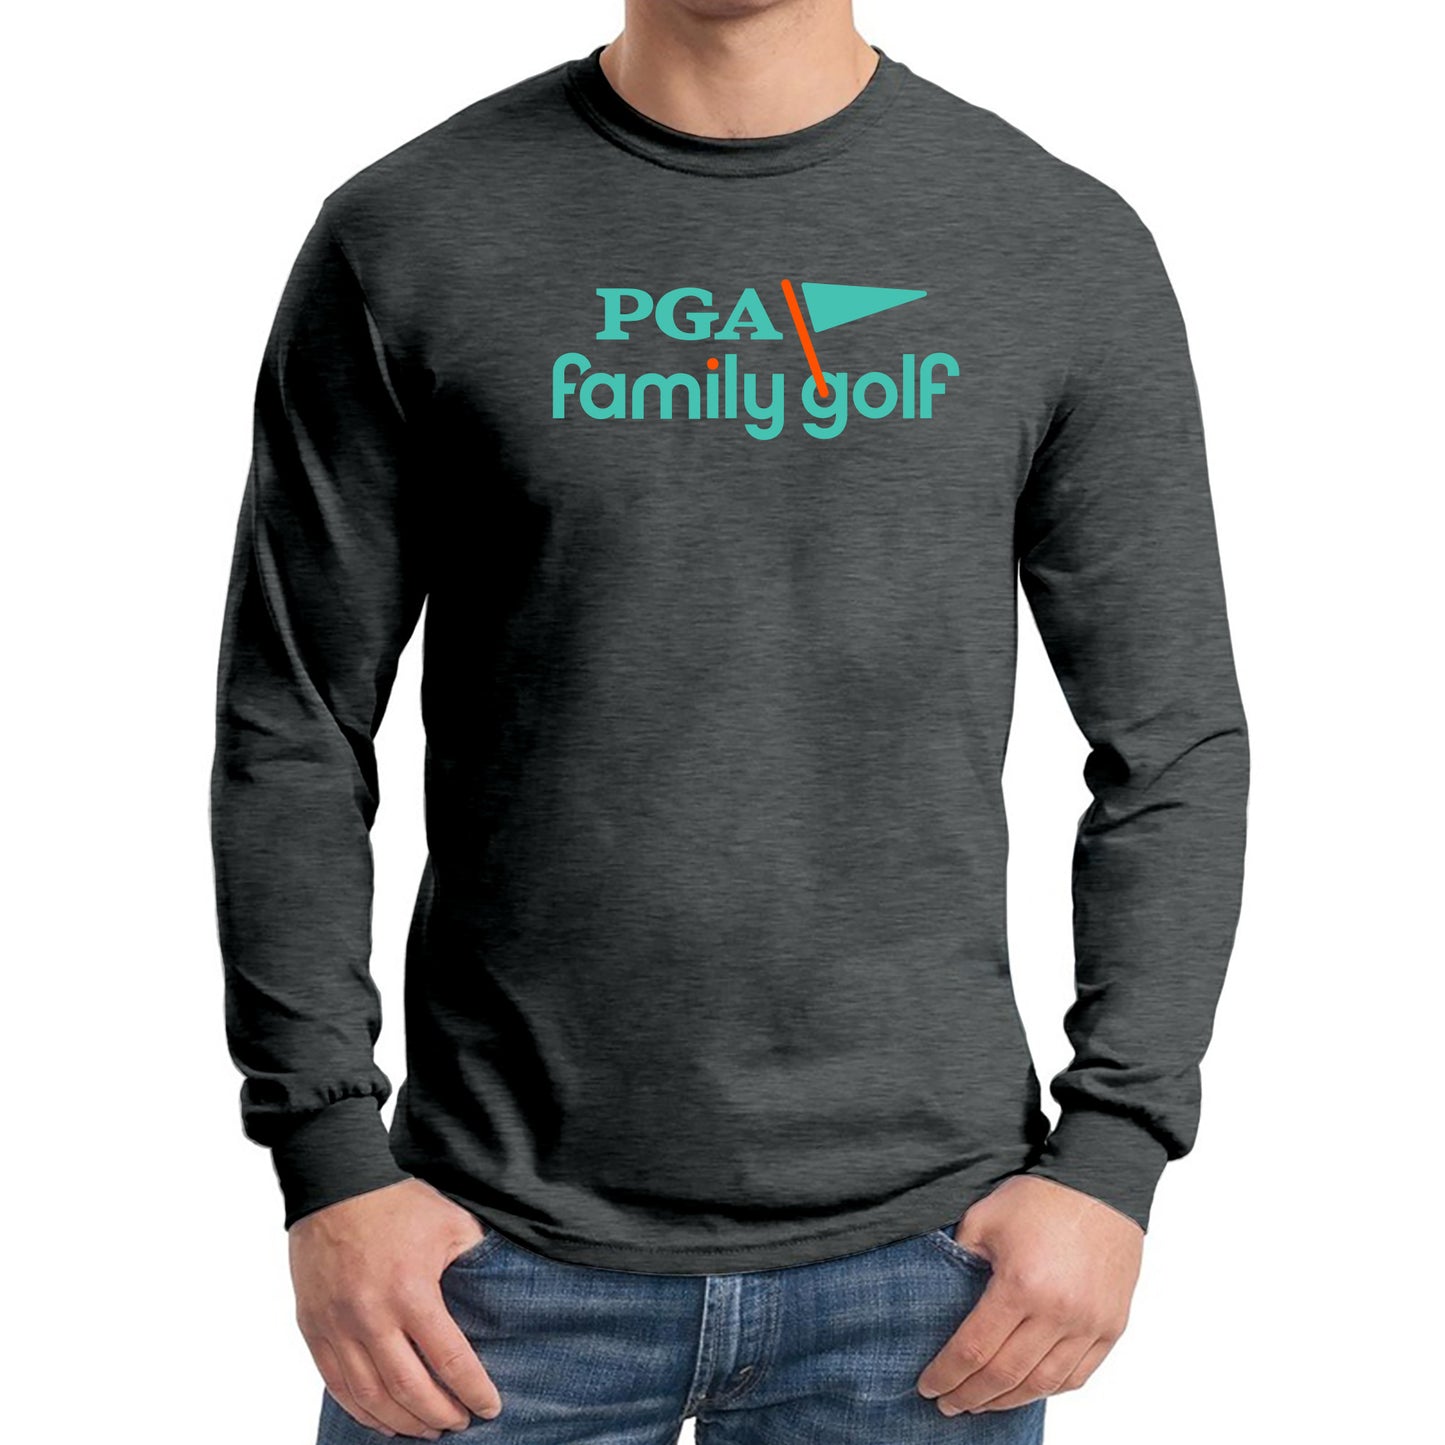 PGA Family Golf Adult Longsleeve T-Shirt - Dark Heather